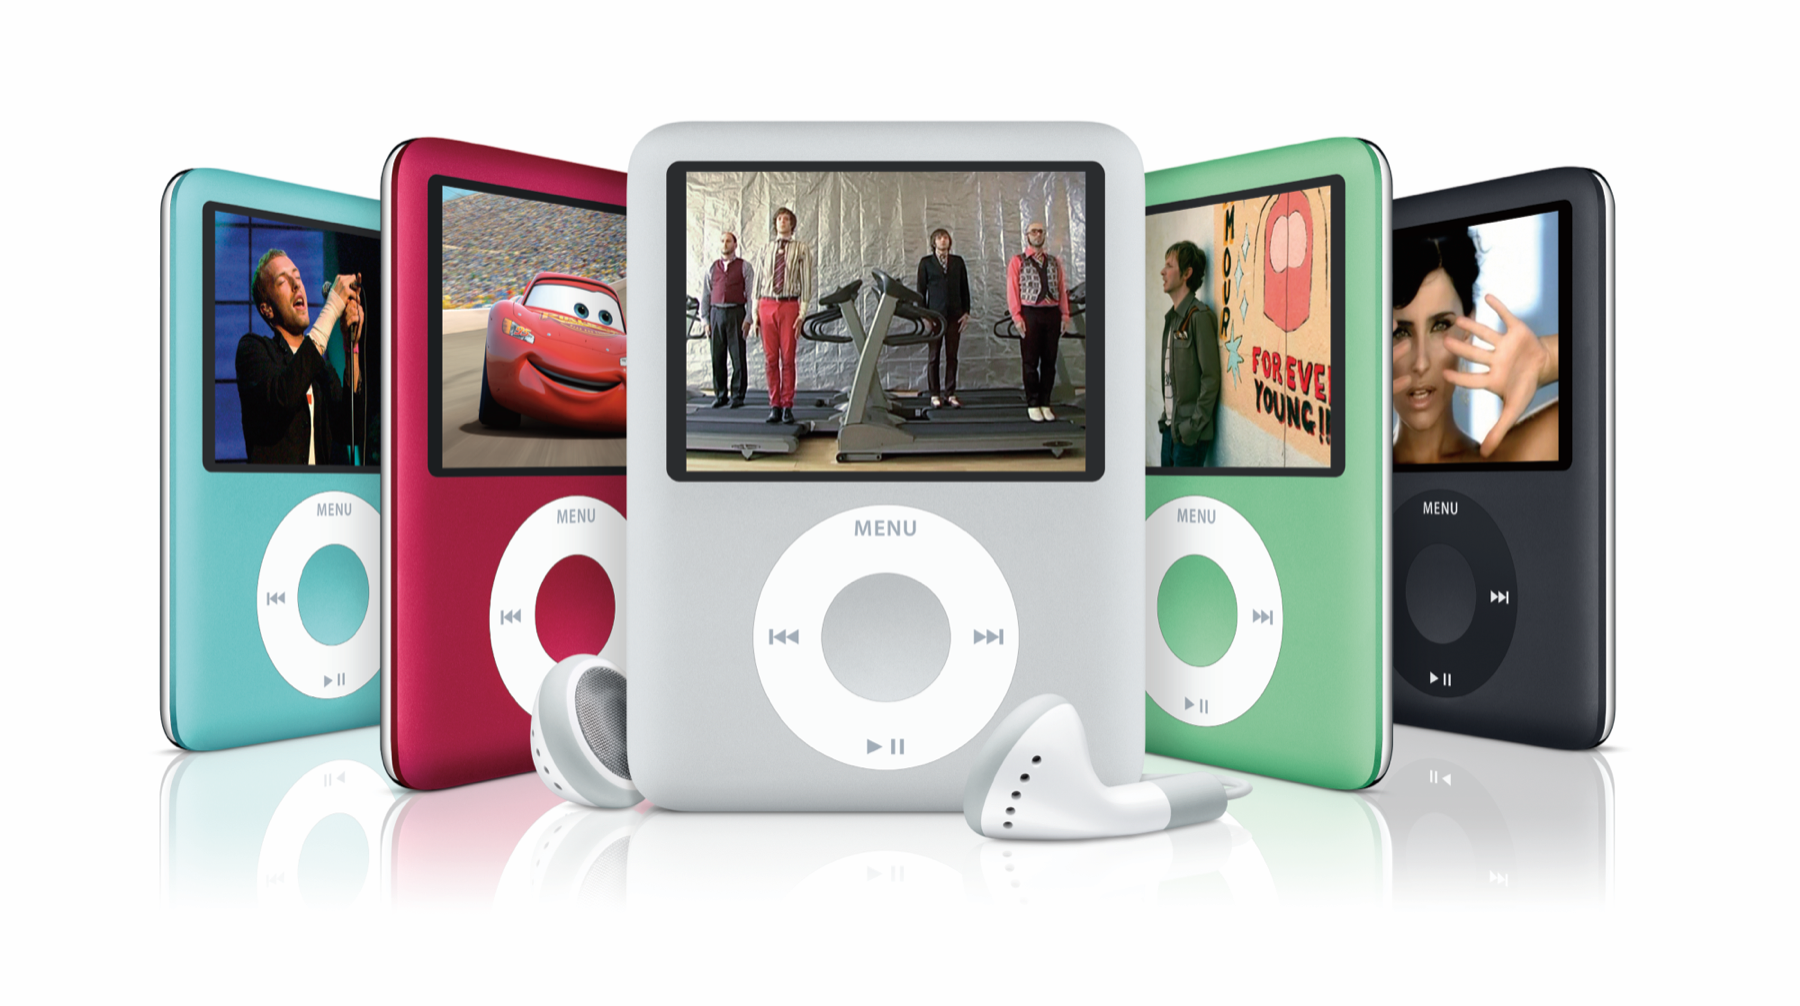 The Evolution of the Apple iPod Nano